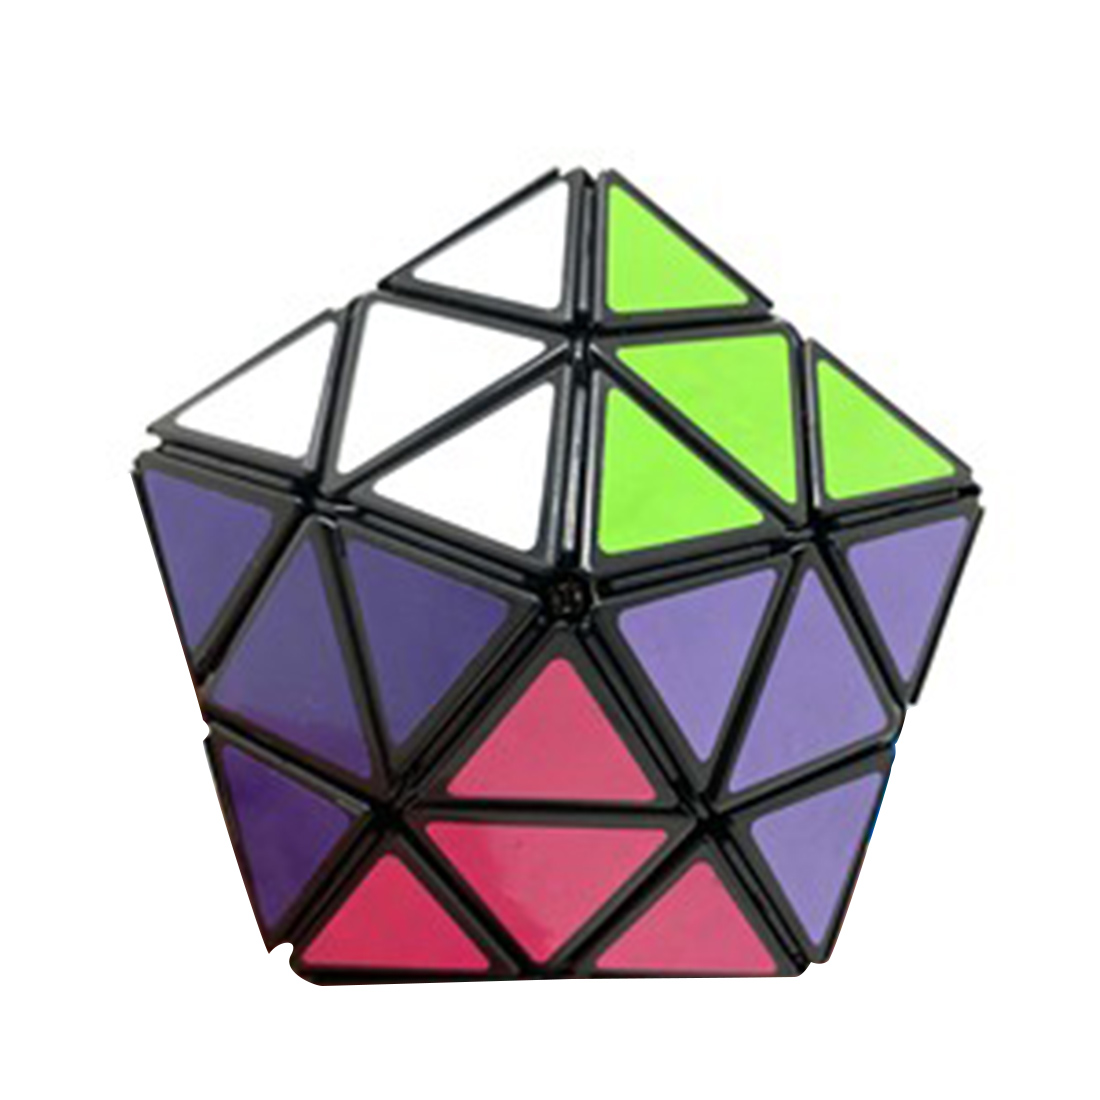 Calvin's Icosahedron Carousel Magic Cube (Black Body)